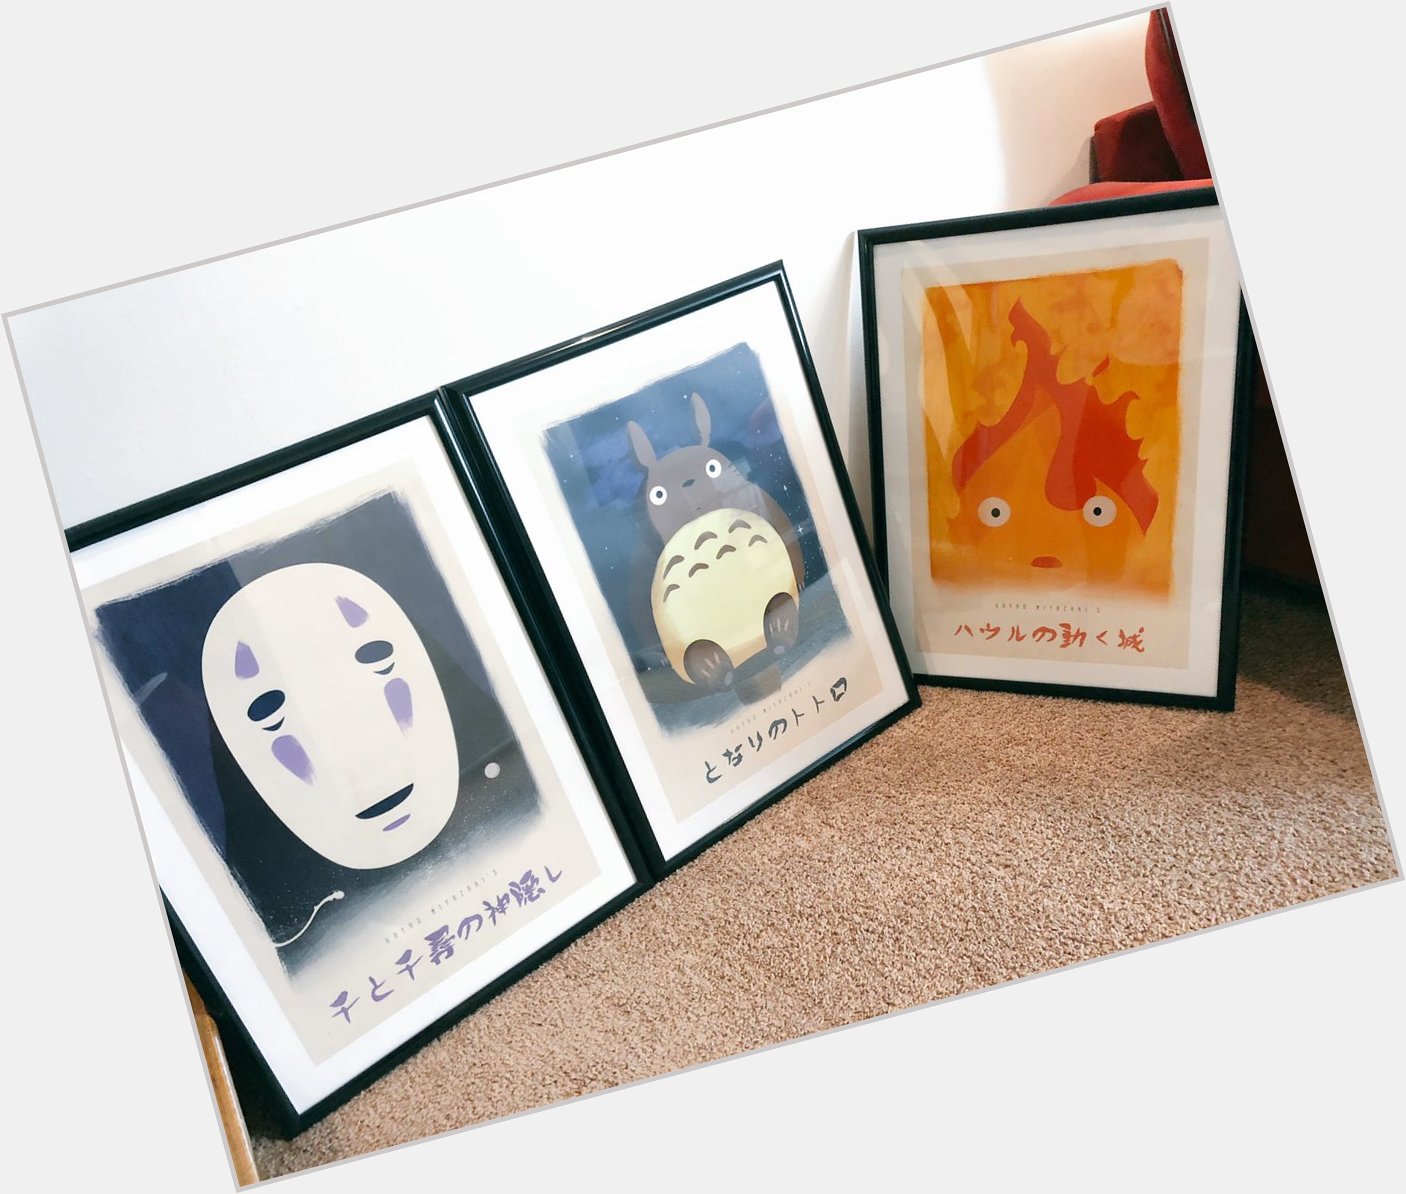 Happy birthday to Hayao Miyazaki! Just got these babies framed last night. 